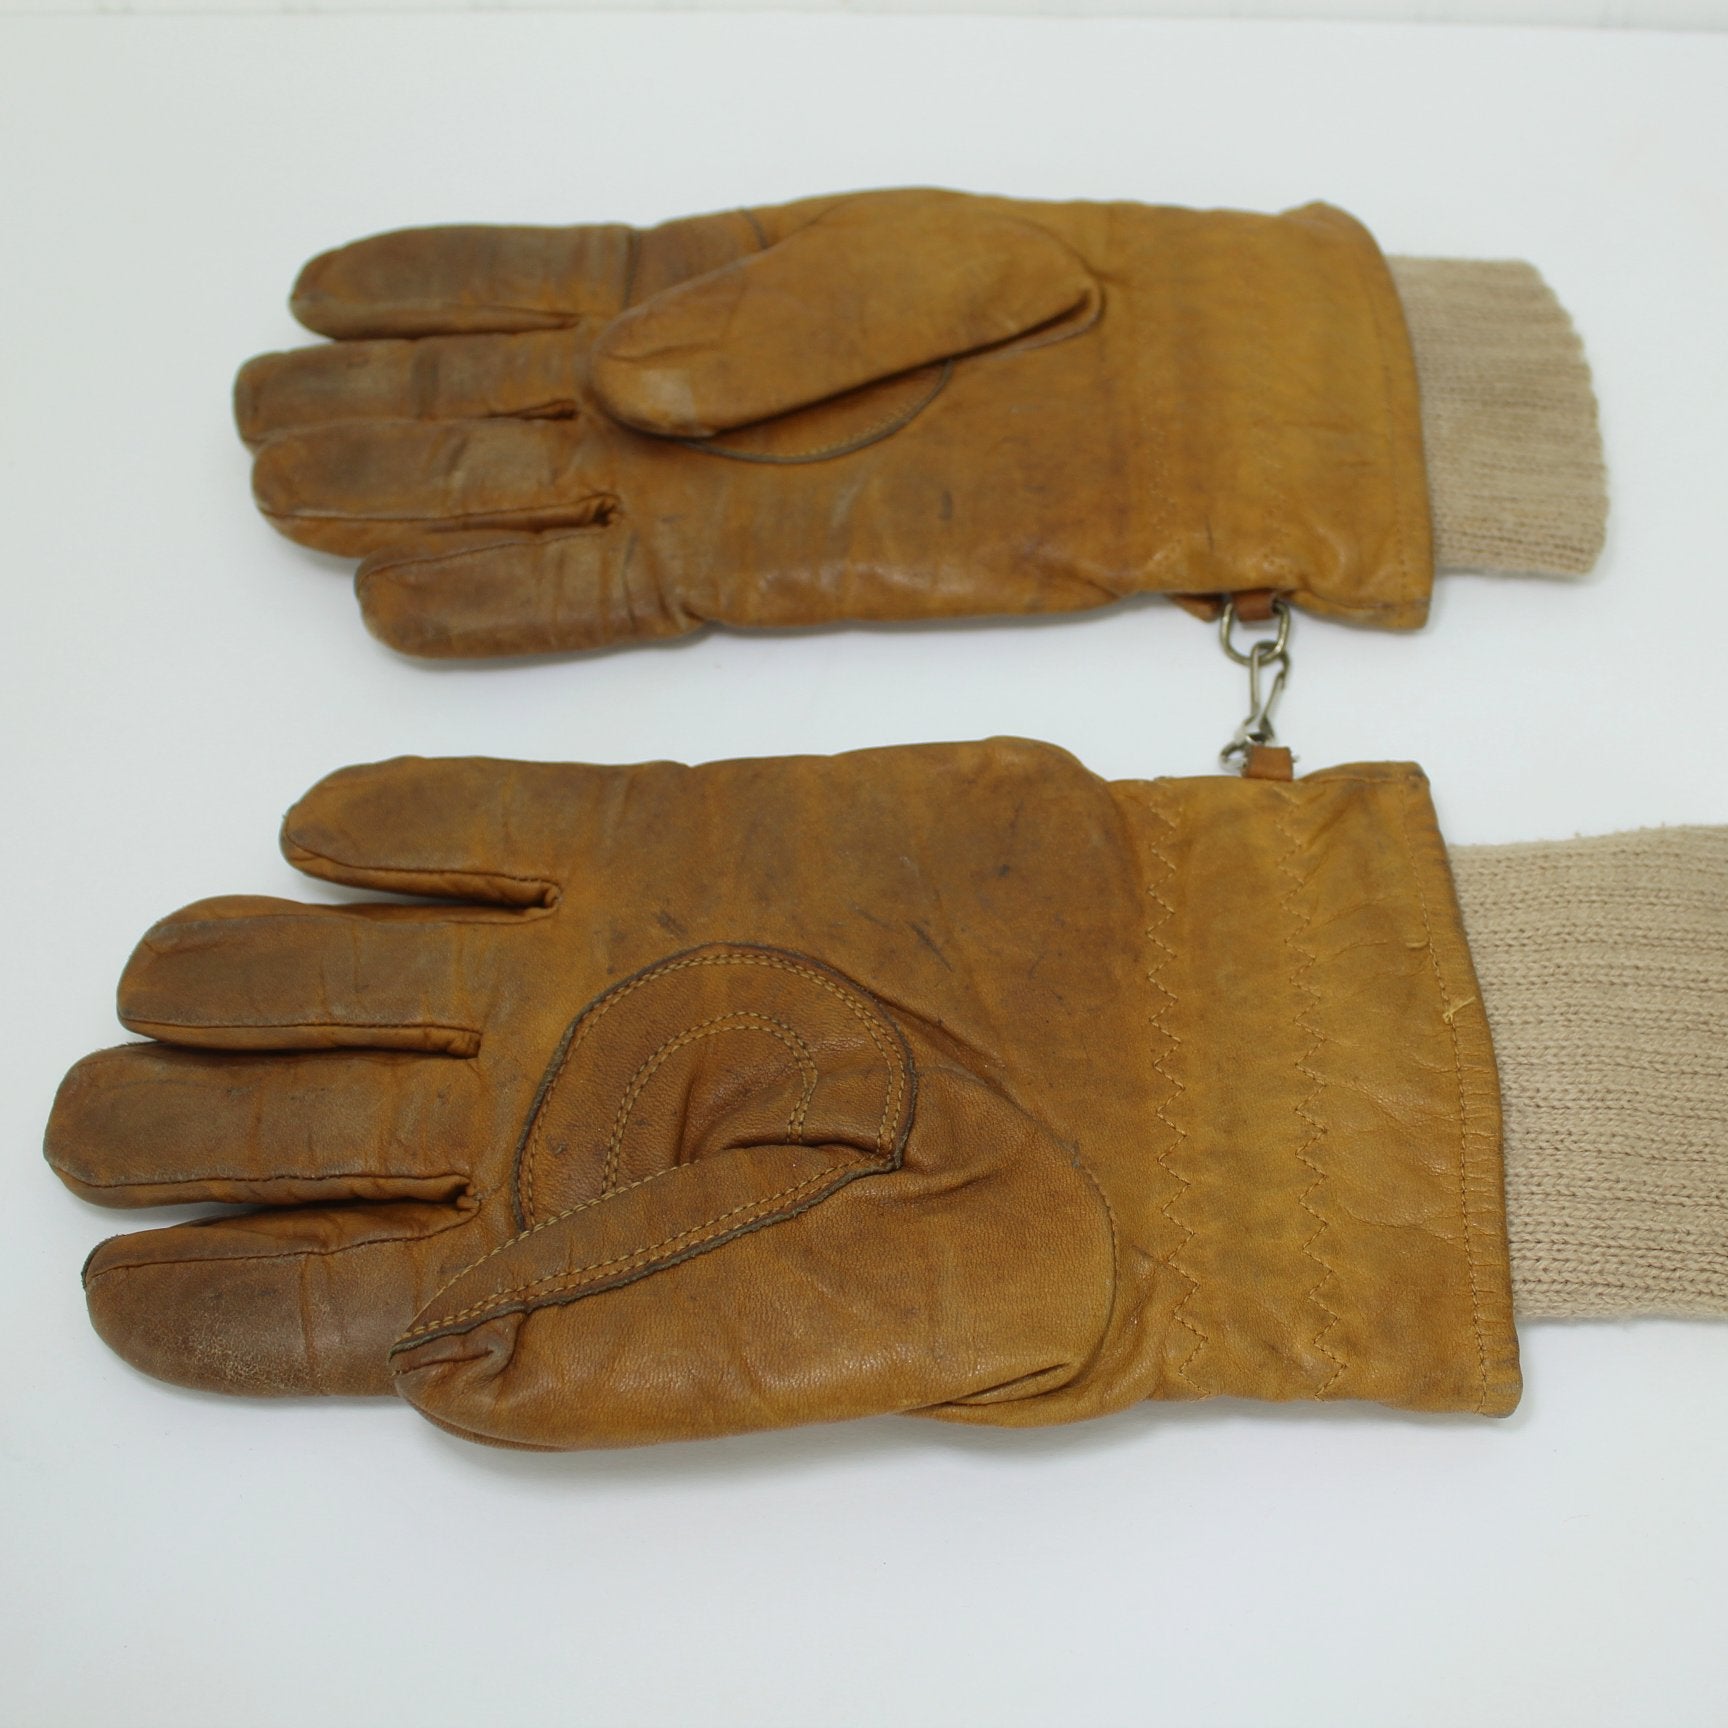 Channellock Men's XL Leather Work Glove - Brownsboro Hardware & Paint